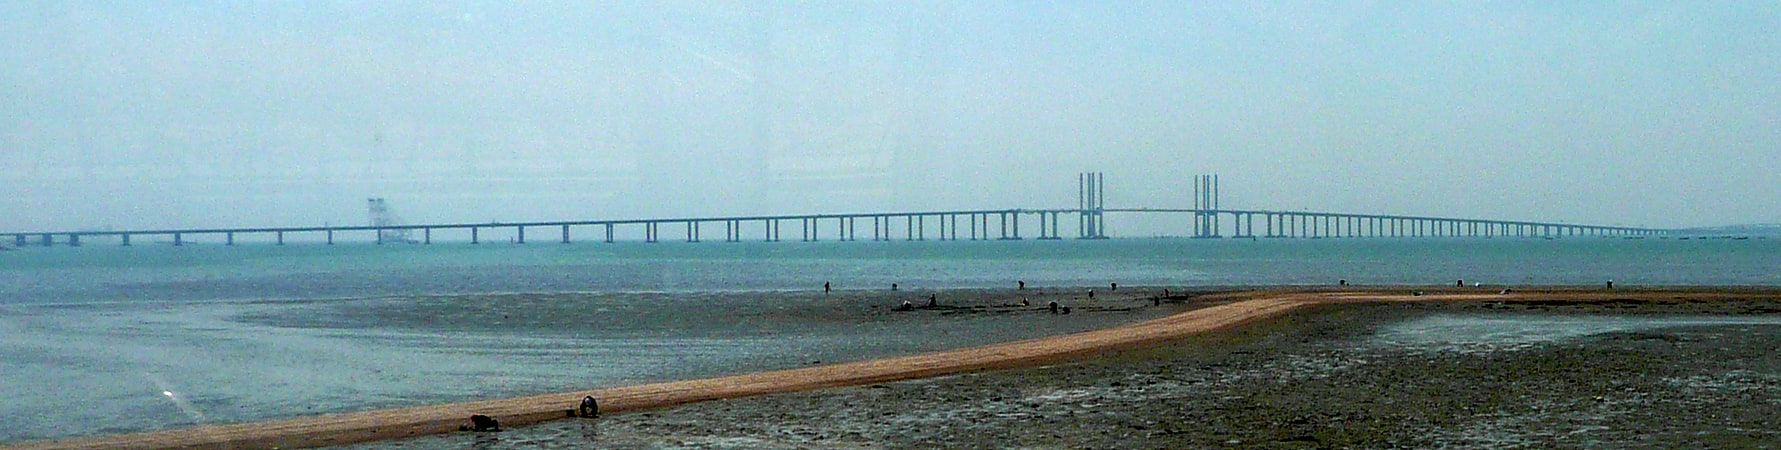 Pont suspendu auto-ancré à Qingdao, Chine